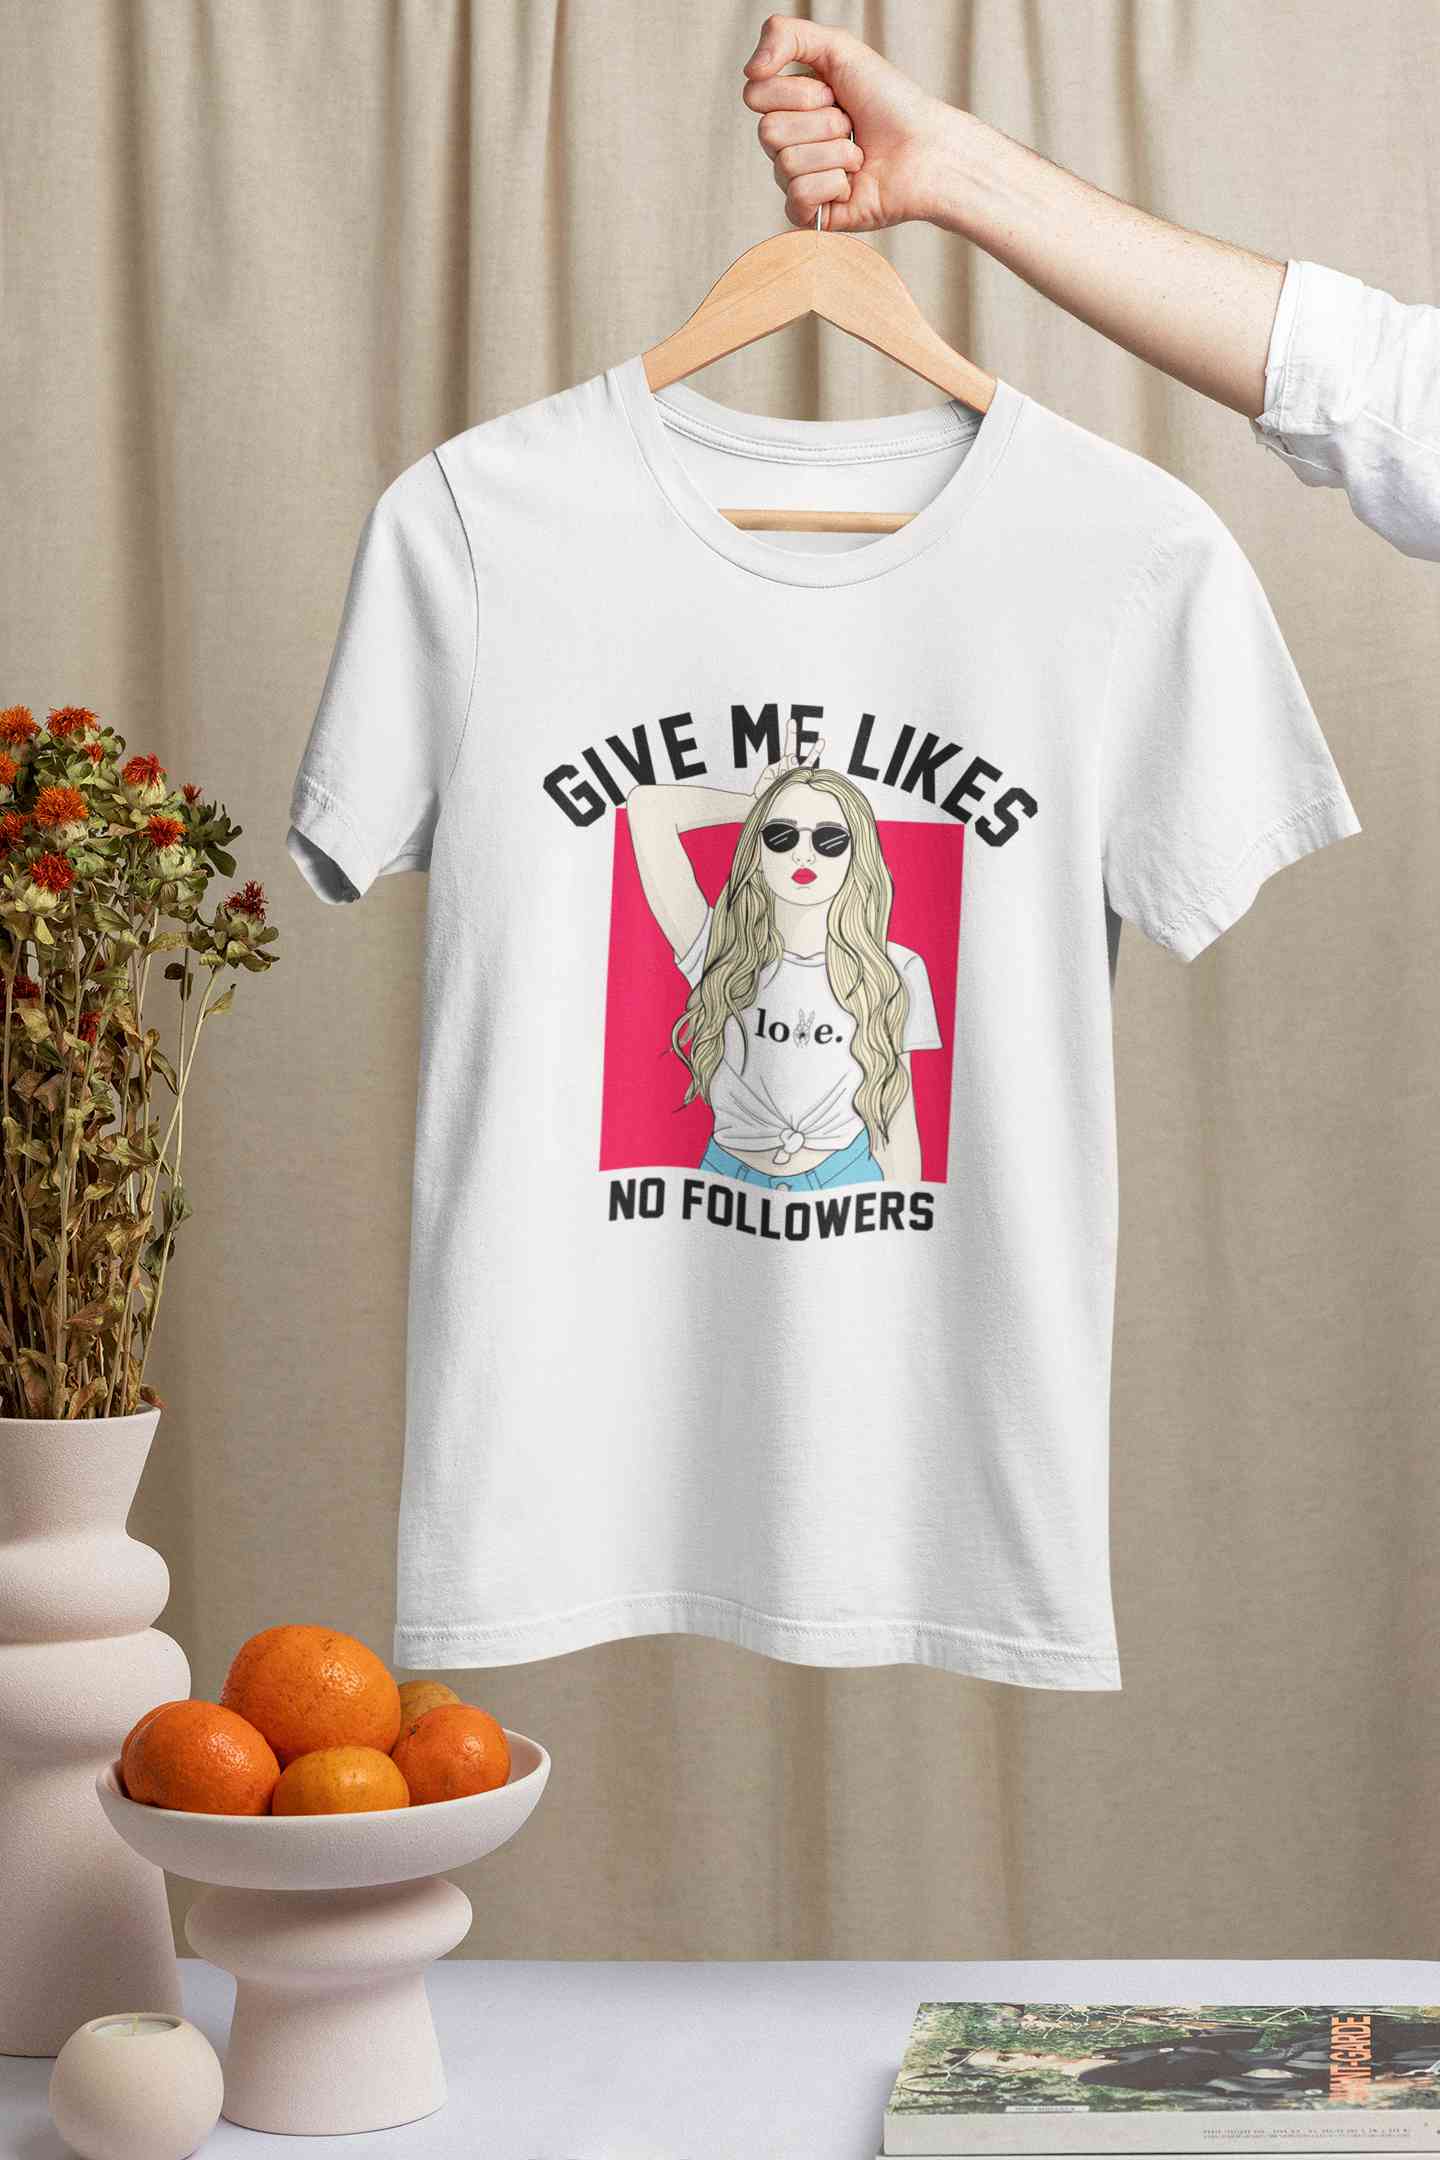 Give Me Likes No Followers Typography Women Half Sleeves T-shirt- FunkyTeesClub